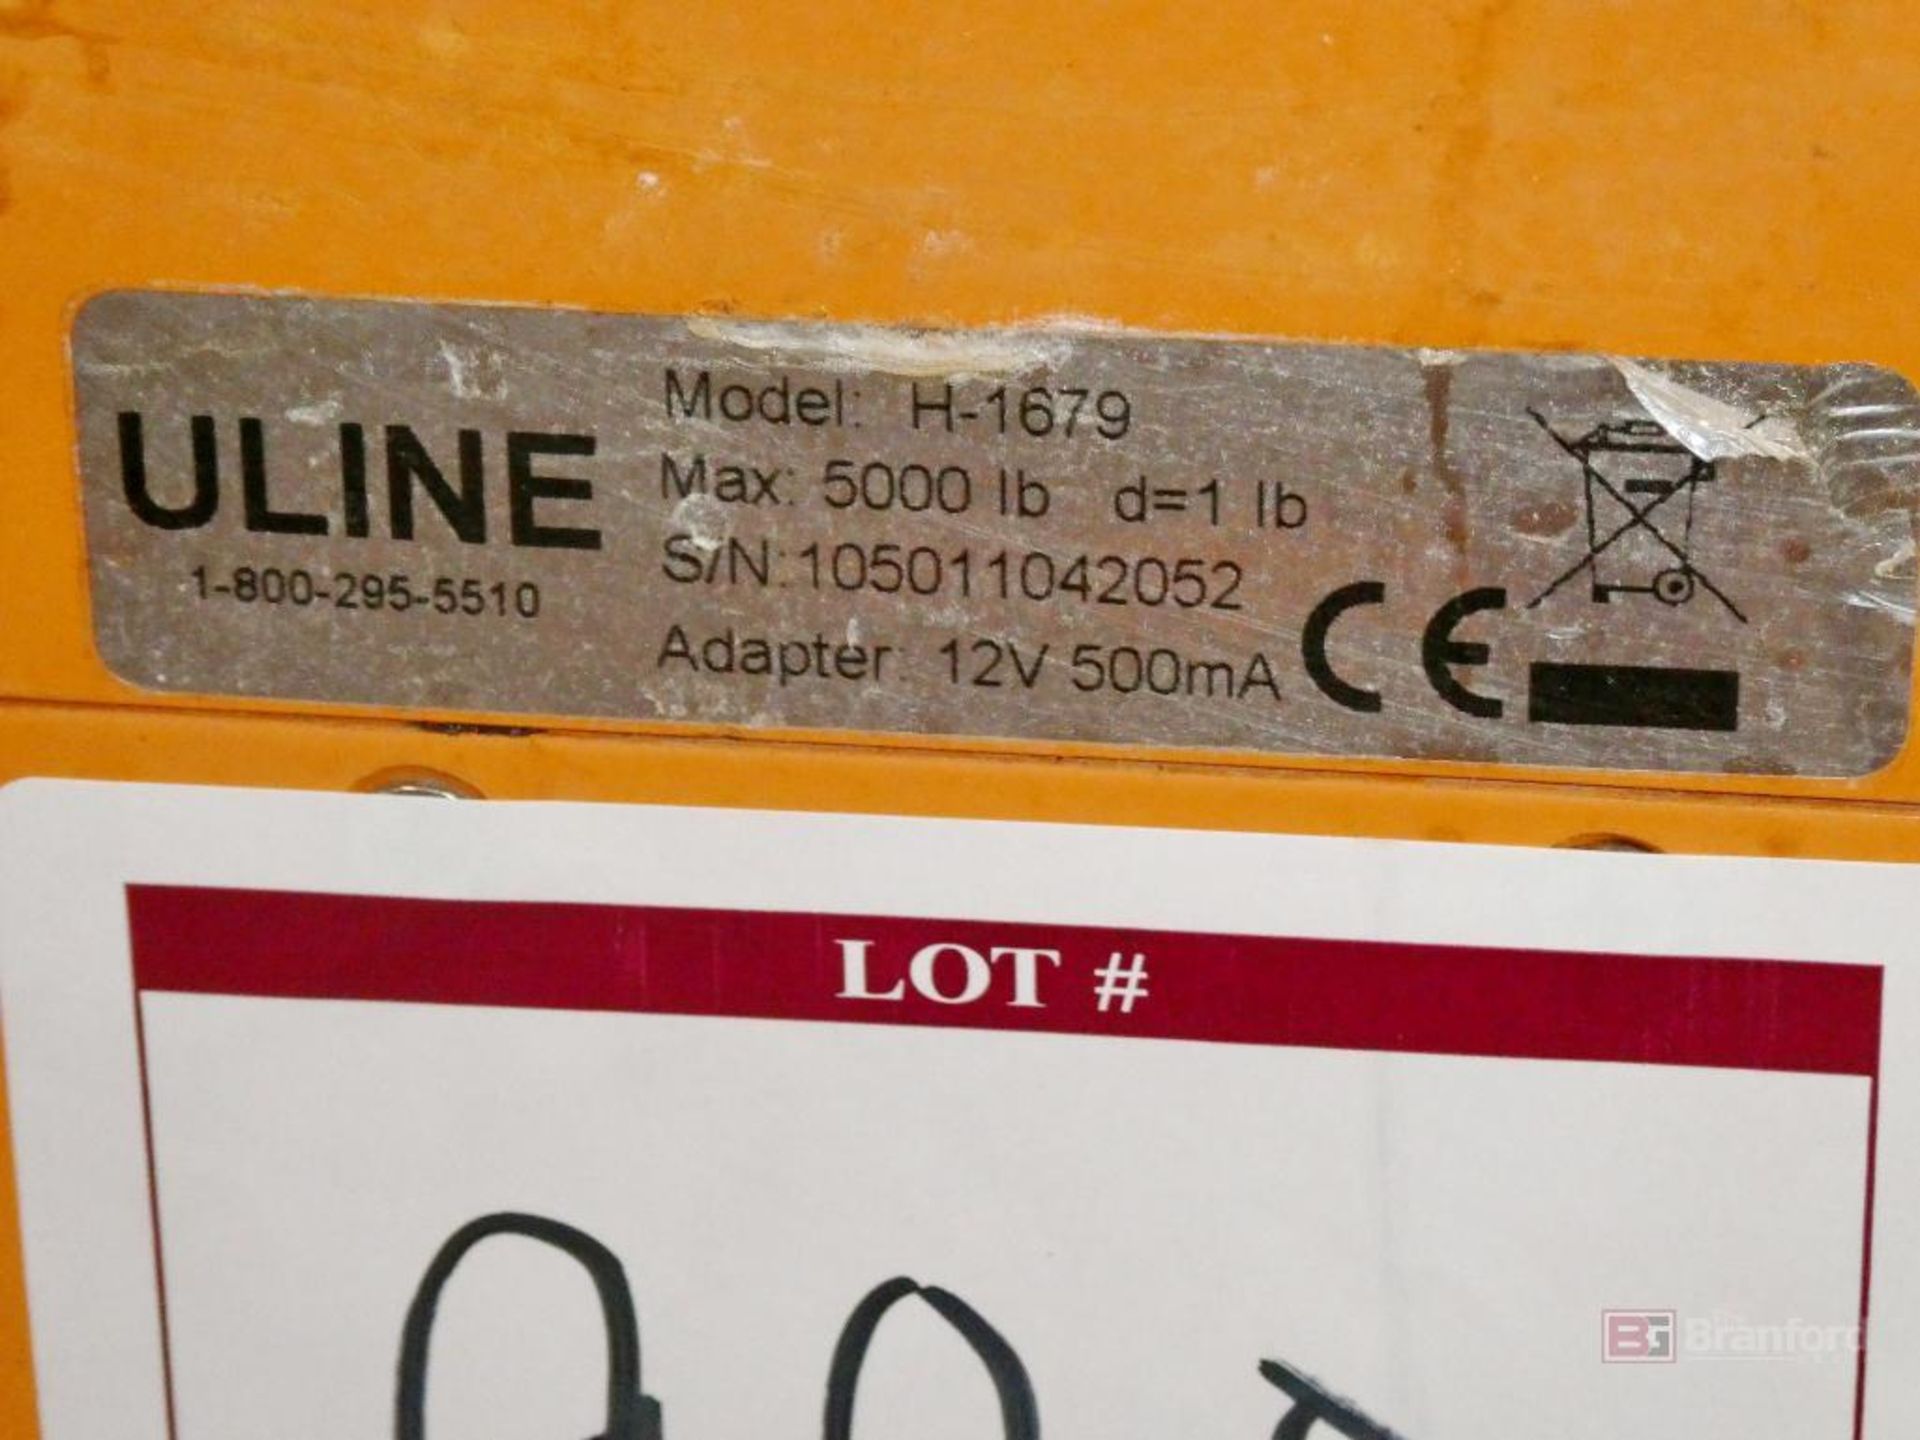 Uline Model H1679, Pallet Jack w/ Scale - Image 4 of 4